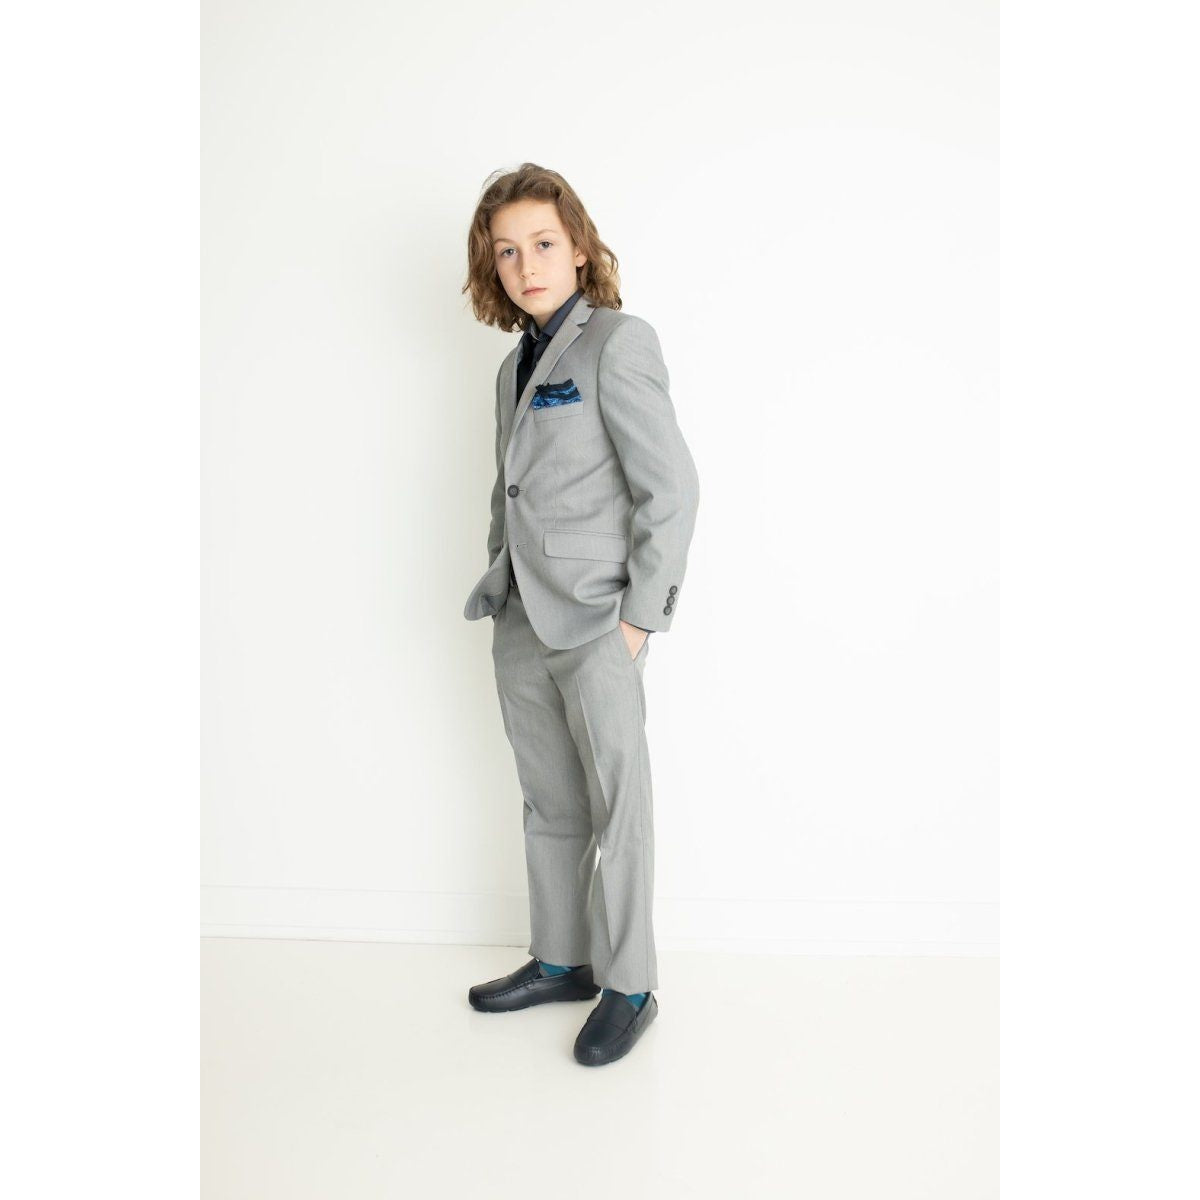 Marc New York Boys Husky Light Grey Sharkskin Suit WH550 Suits (Boys) Marc New York 